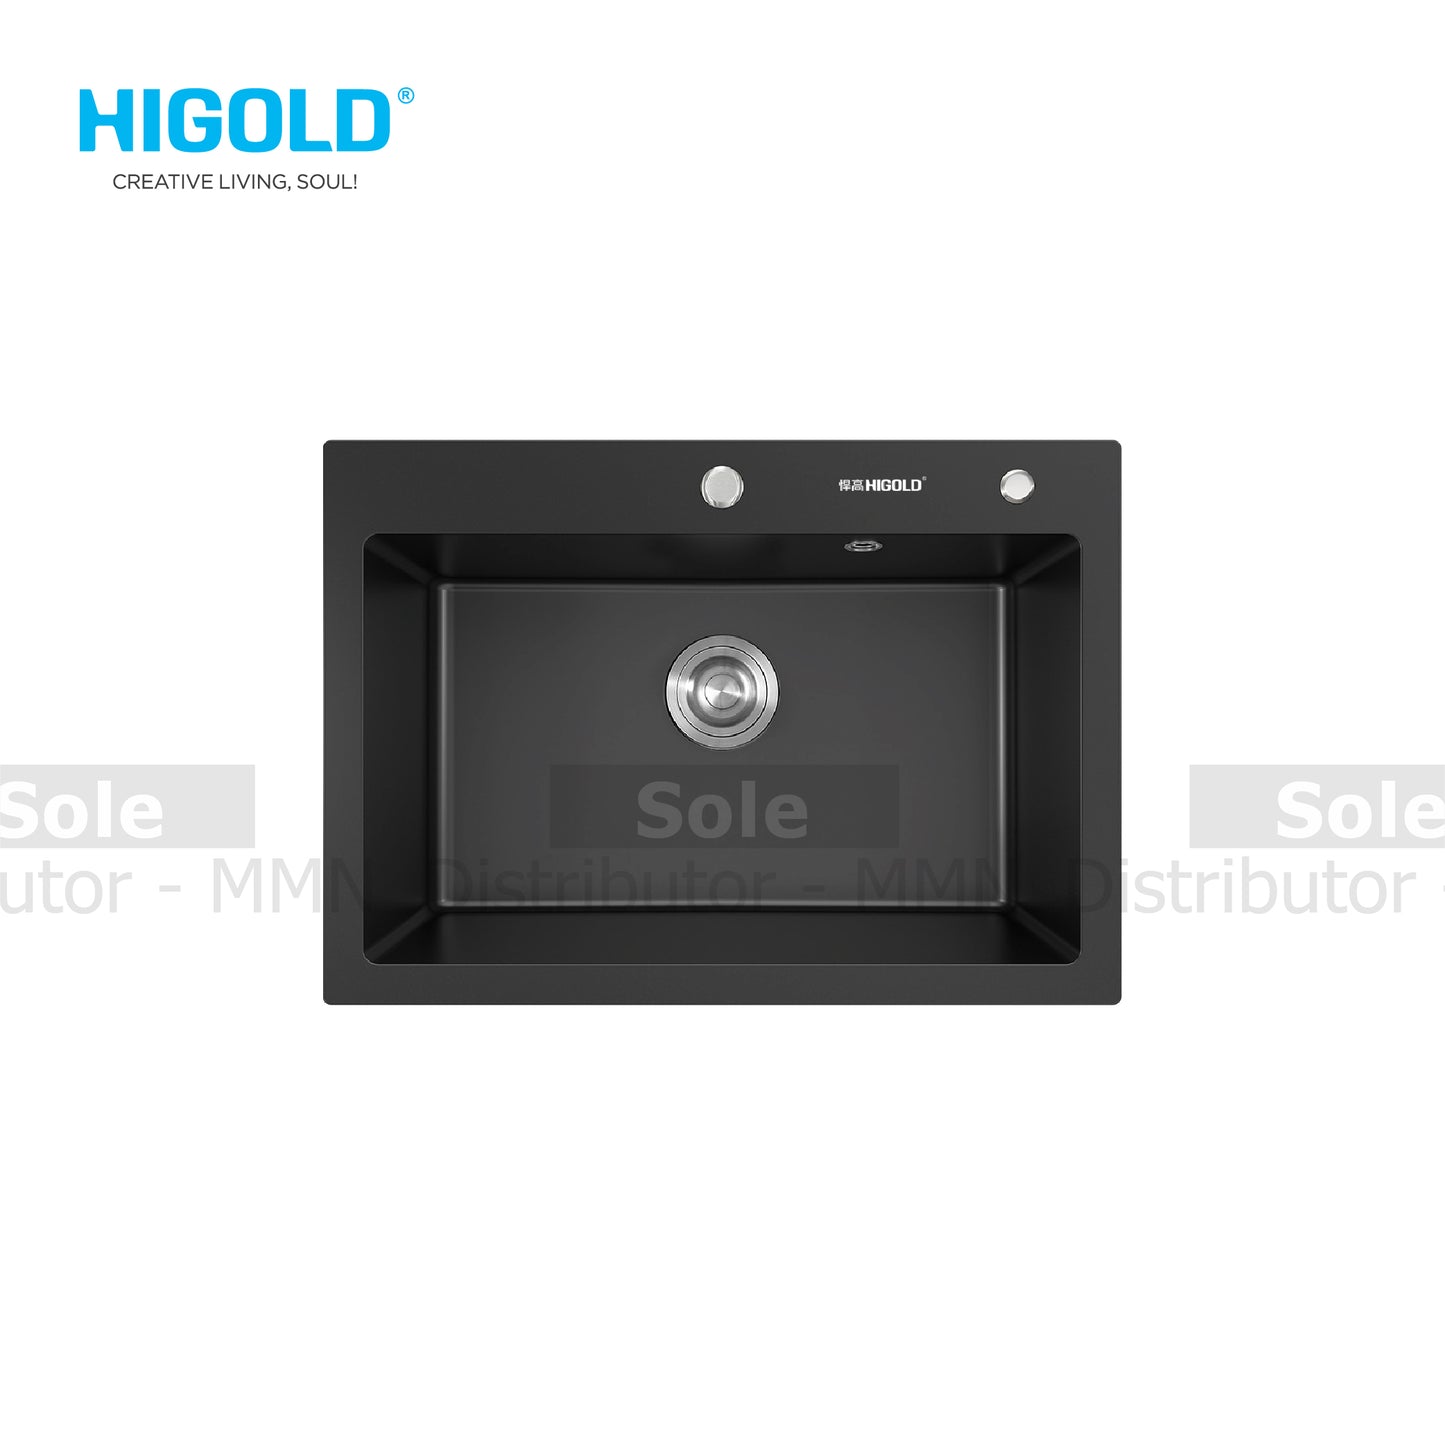 Higold Quartz Sink Single Bowl Composite Dimension 580x450x200mm Black, White, Grey, Red & Pink Colour - HGQ35003